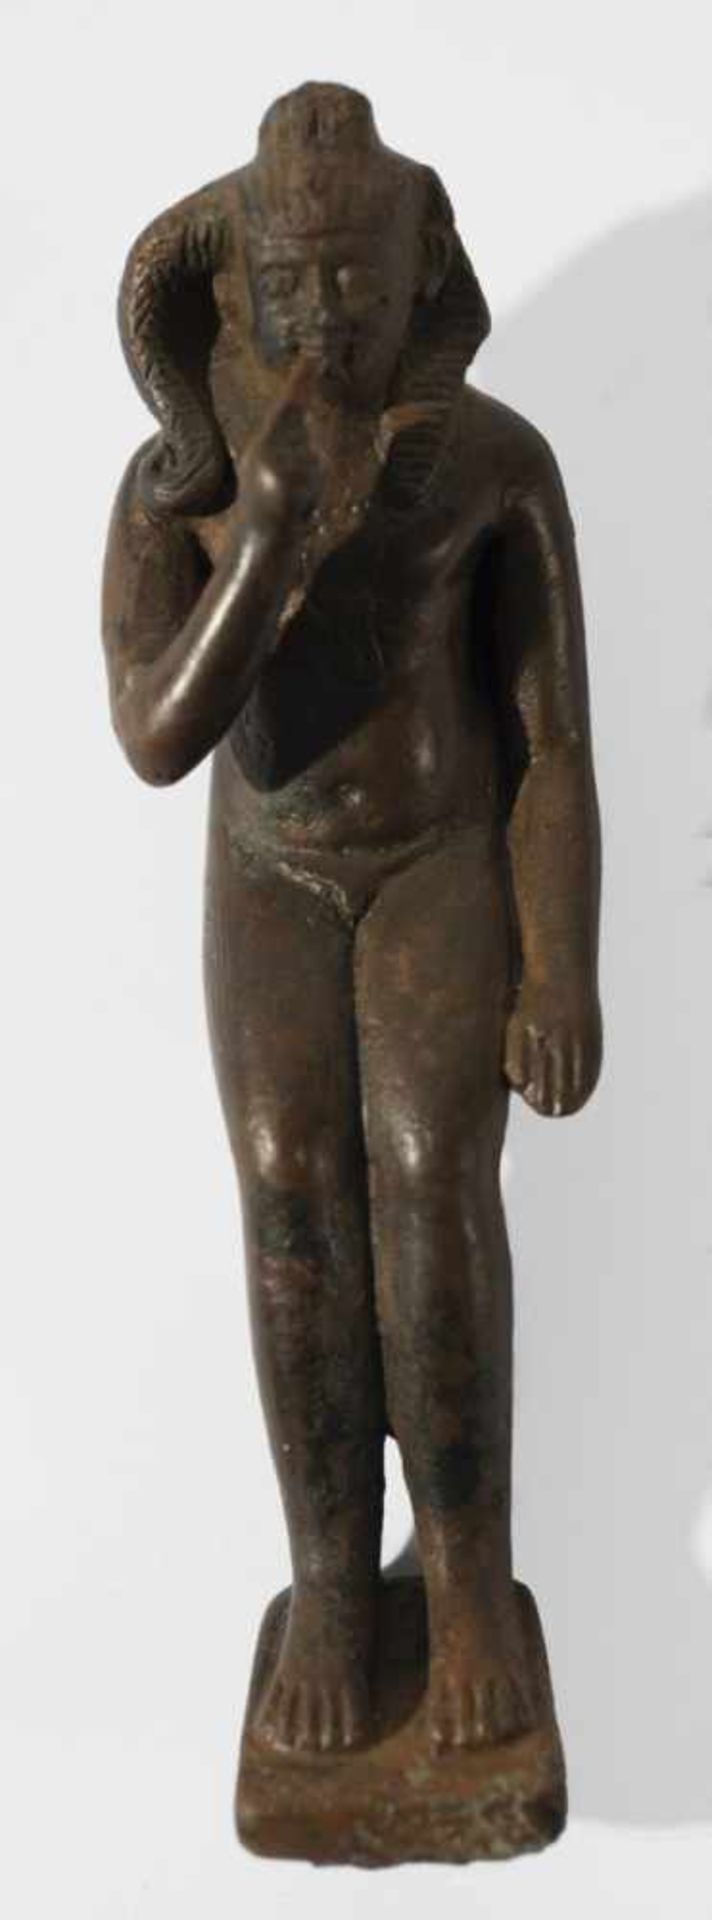 Seated Horus the Child, Egypt, 26th dynasty (664-525 B.C.), Bronze, 8 cm high, Provenance: